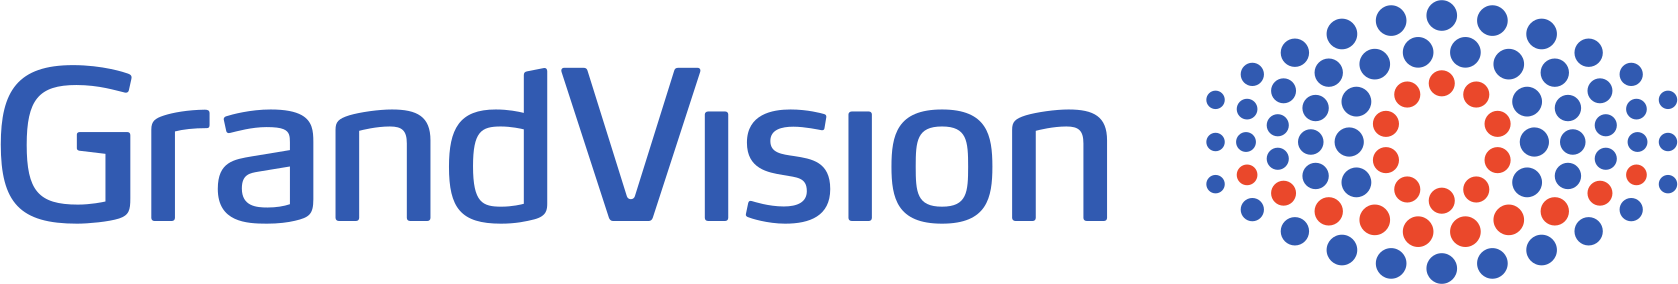 GrandVision logo large (transparent PNG)